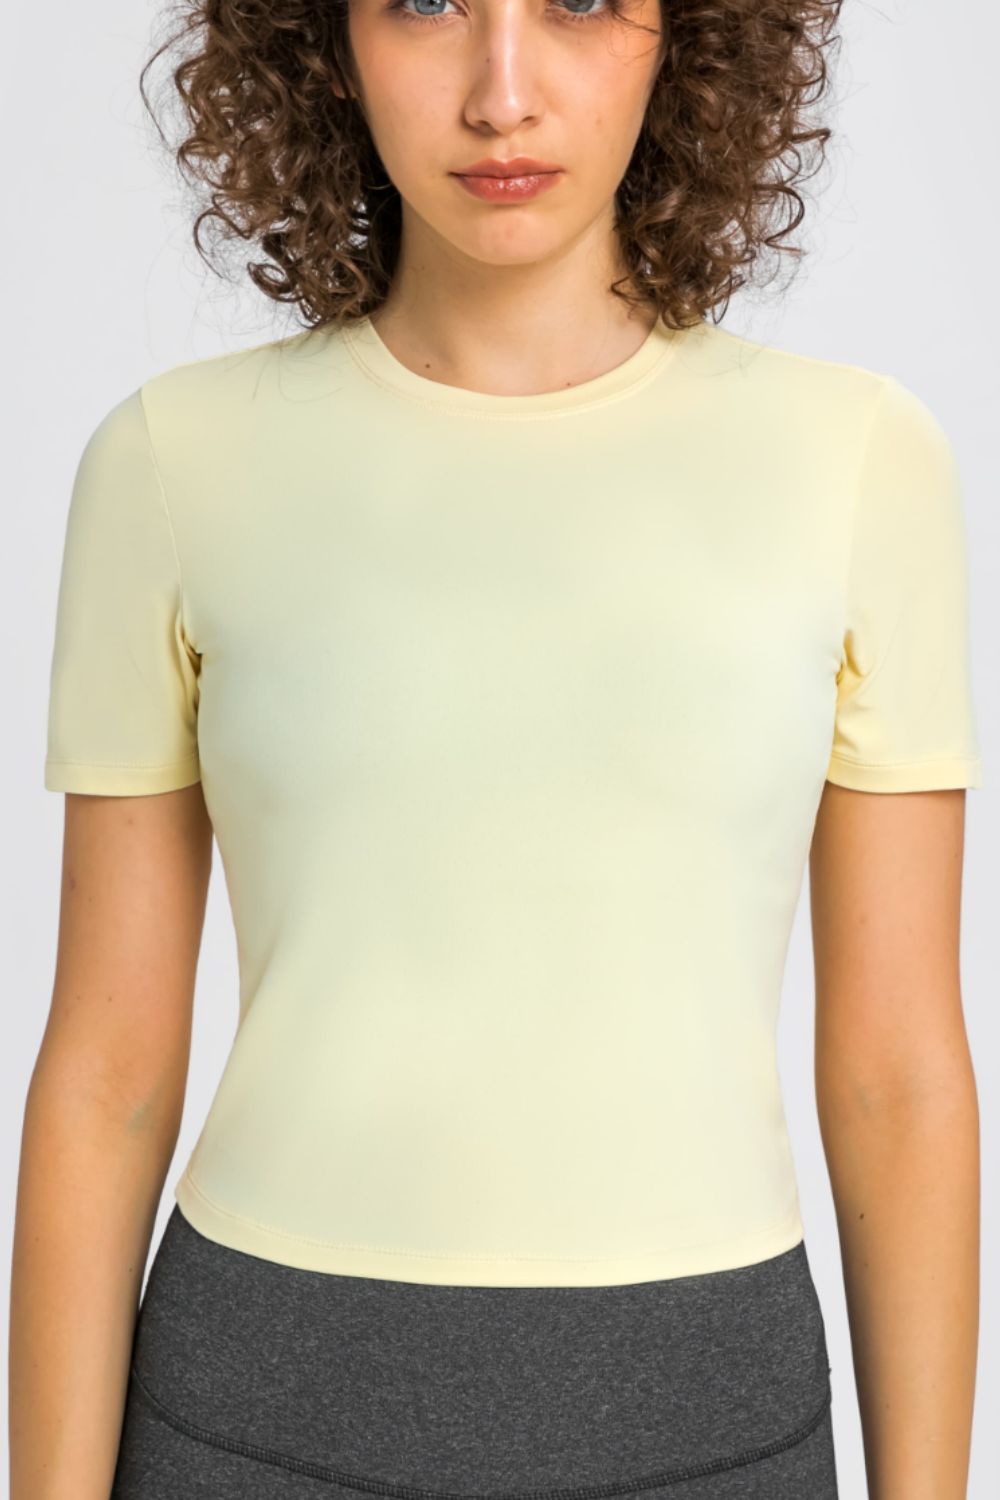 Round Neck Short Sleeve Yoga Tee - Yellow / 4 Apparel & Accessories Wynter 4 All Seasons